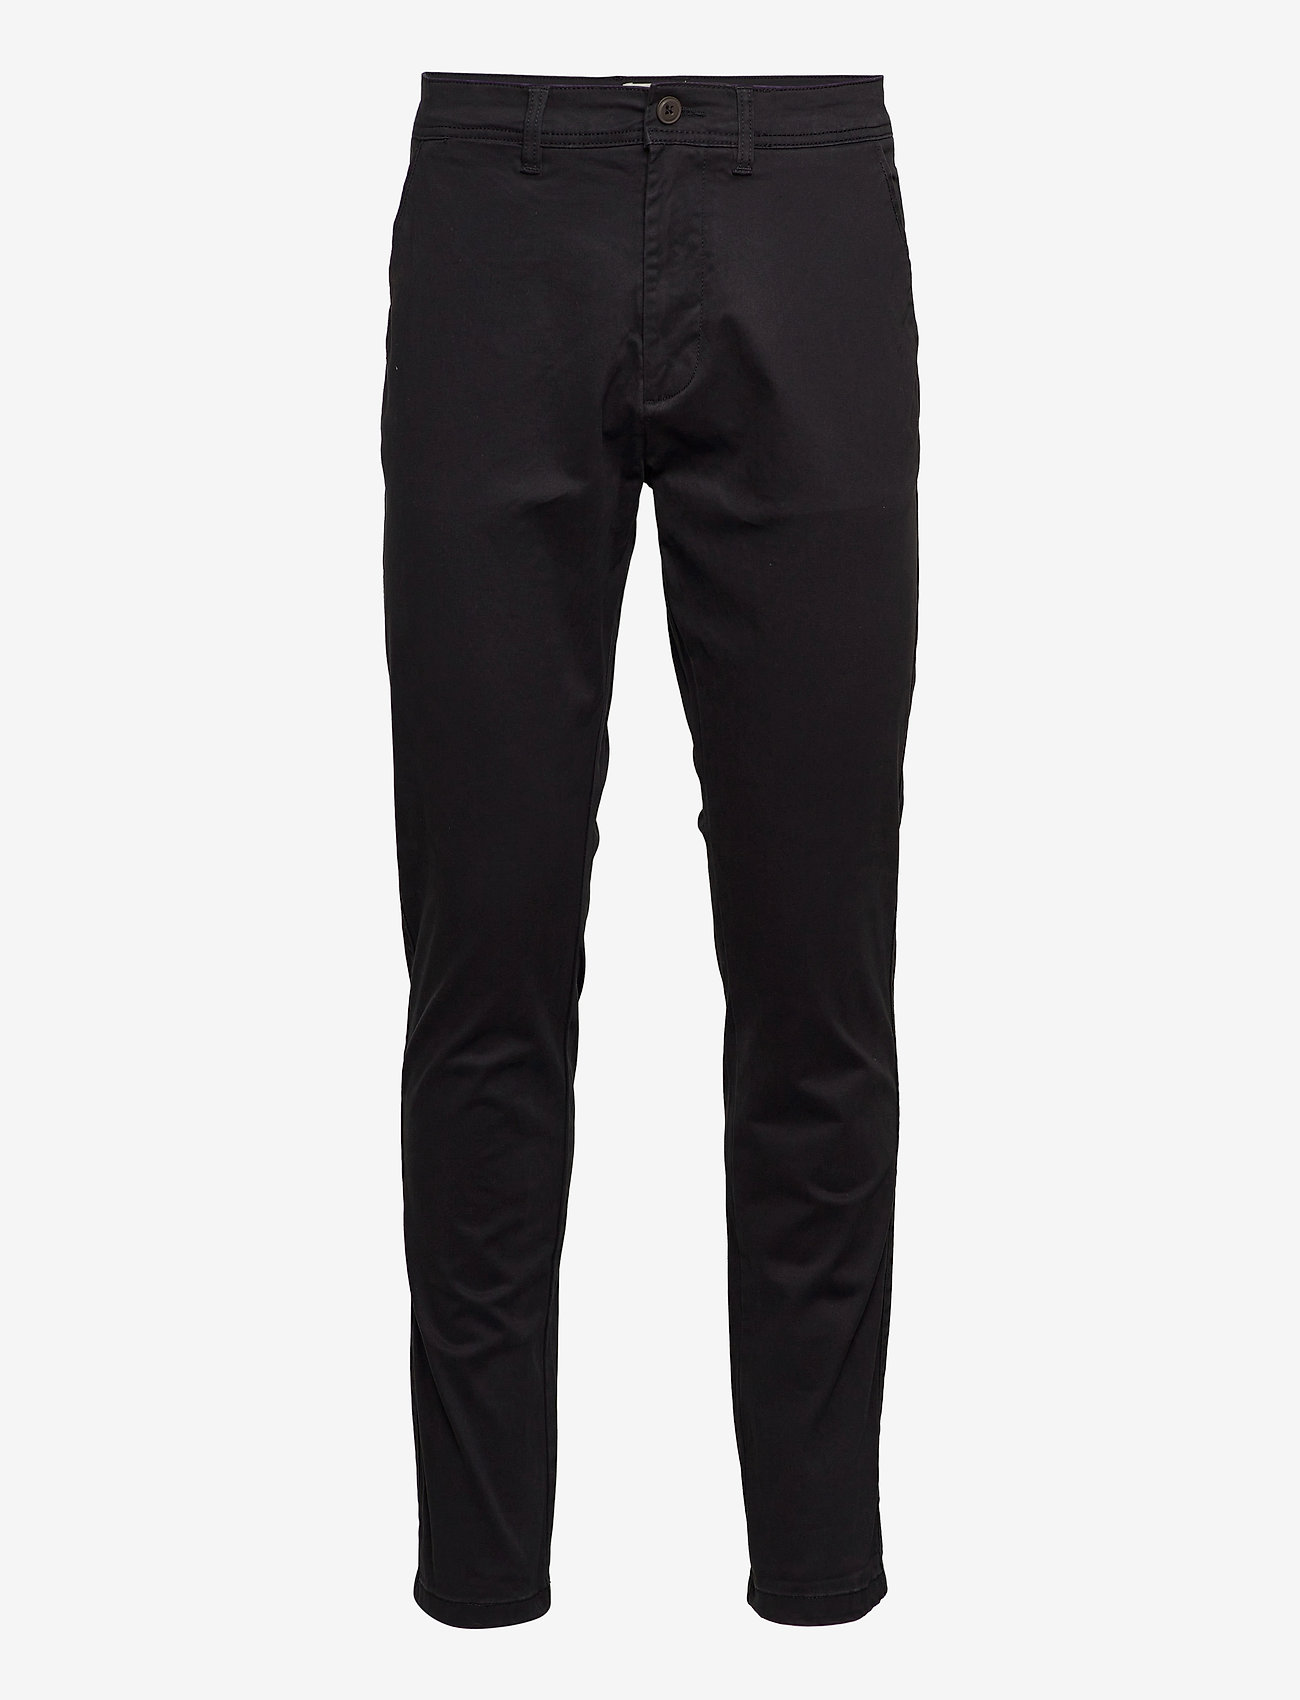 Solid - SDJIM PANTS - „chino“ stiliaus kelnės - black - 0